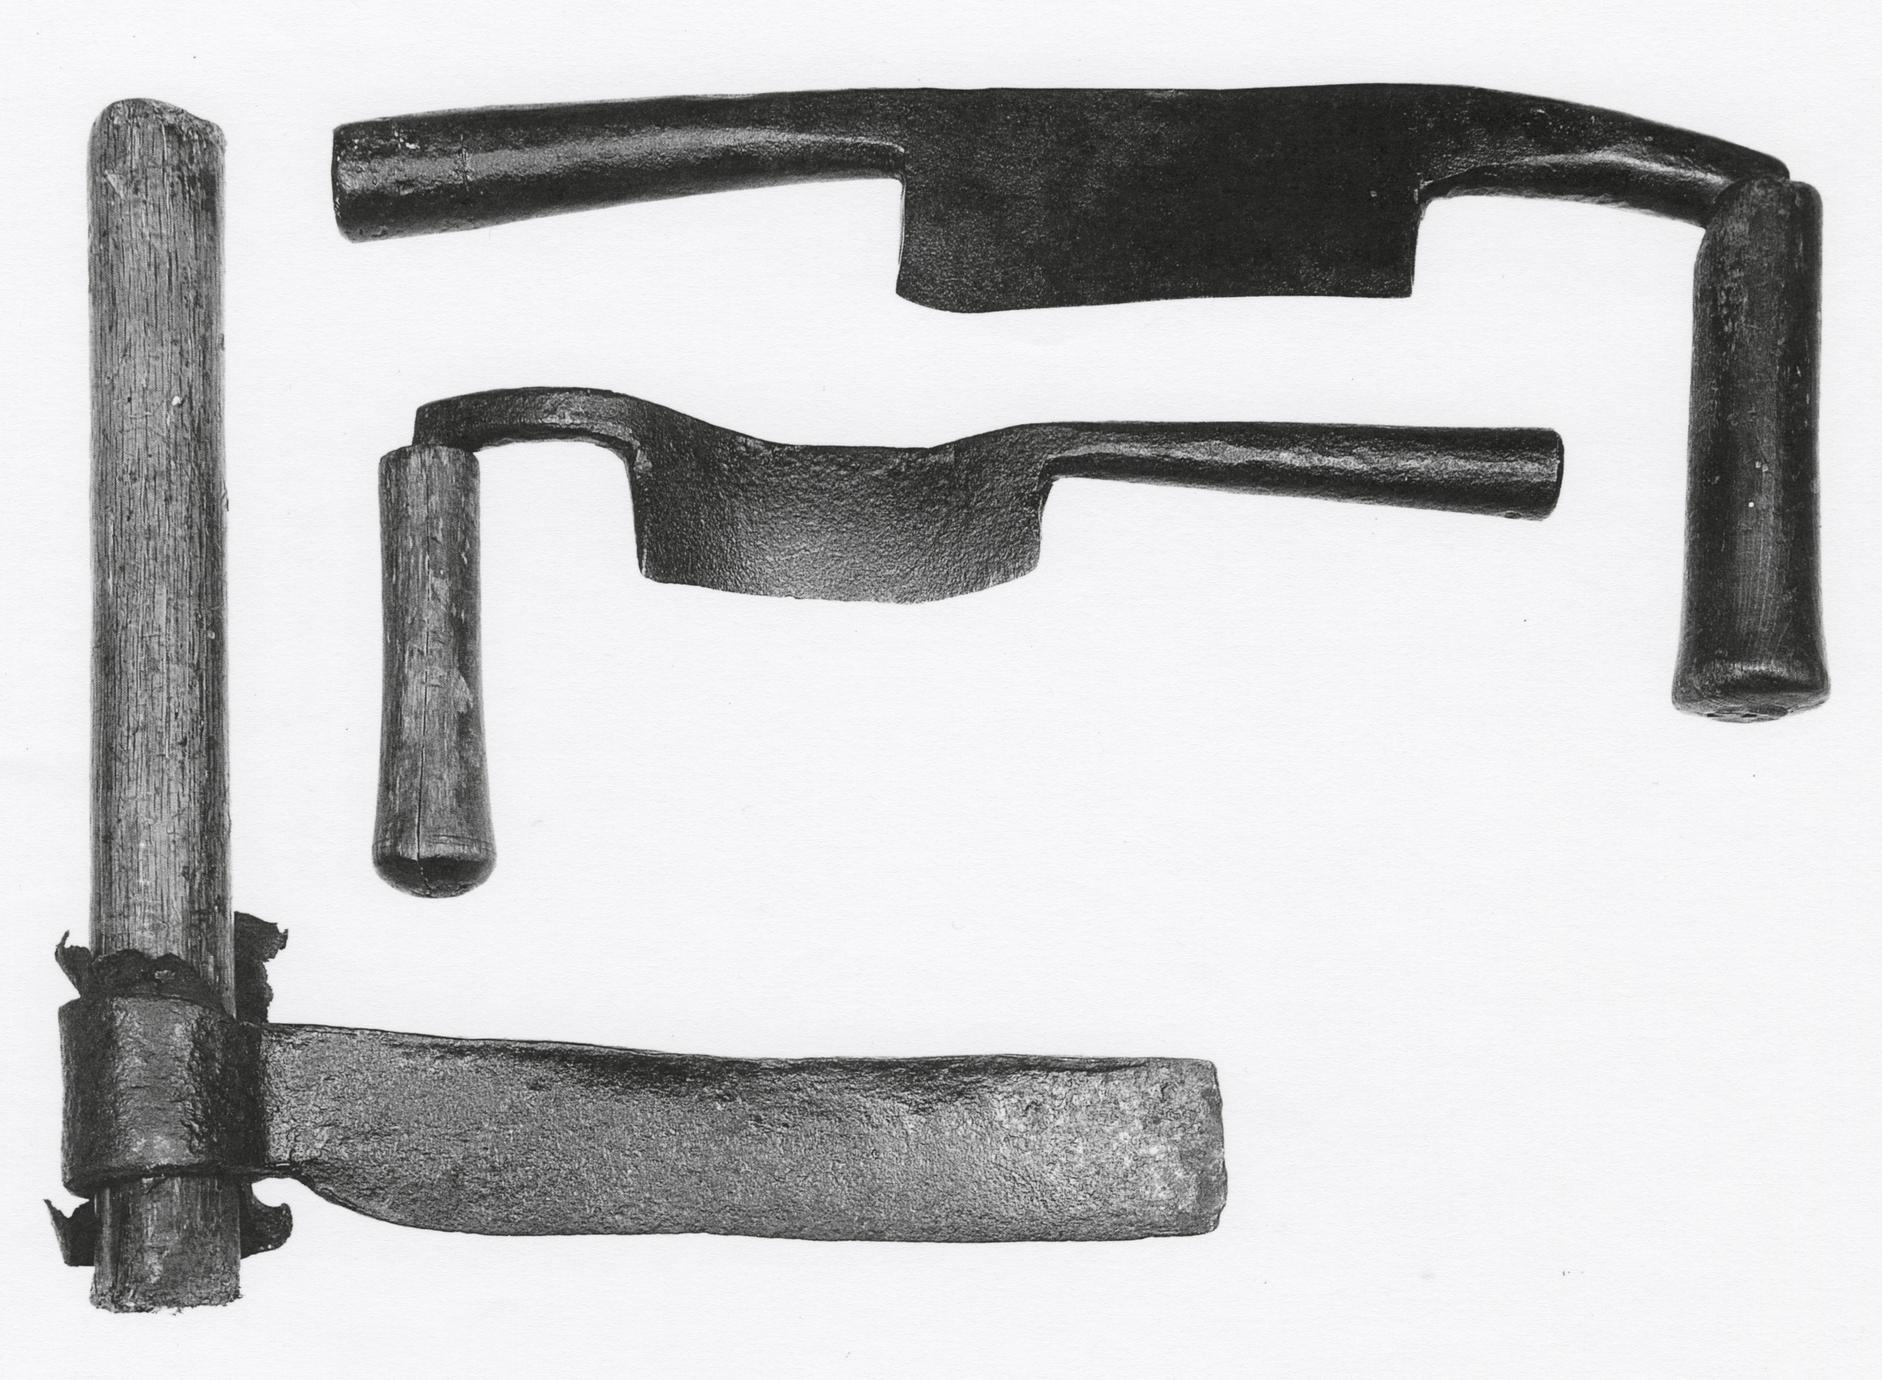 Three examples of drawknives.